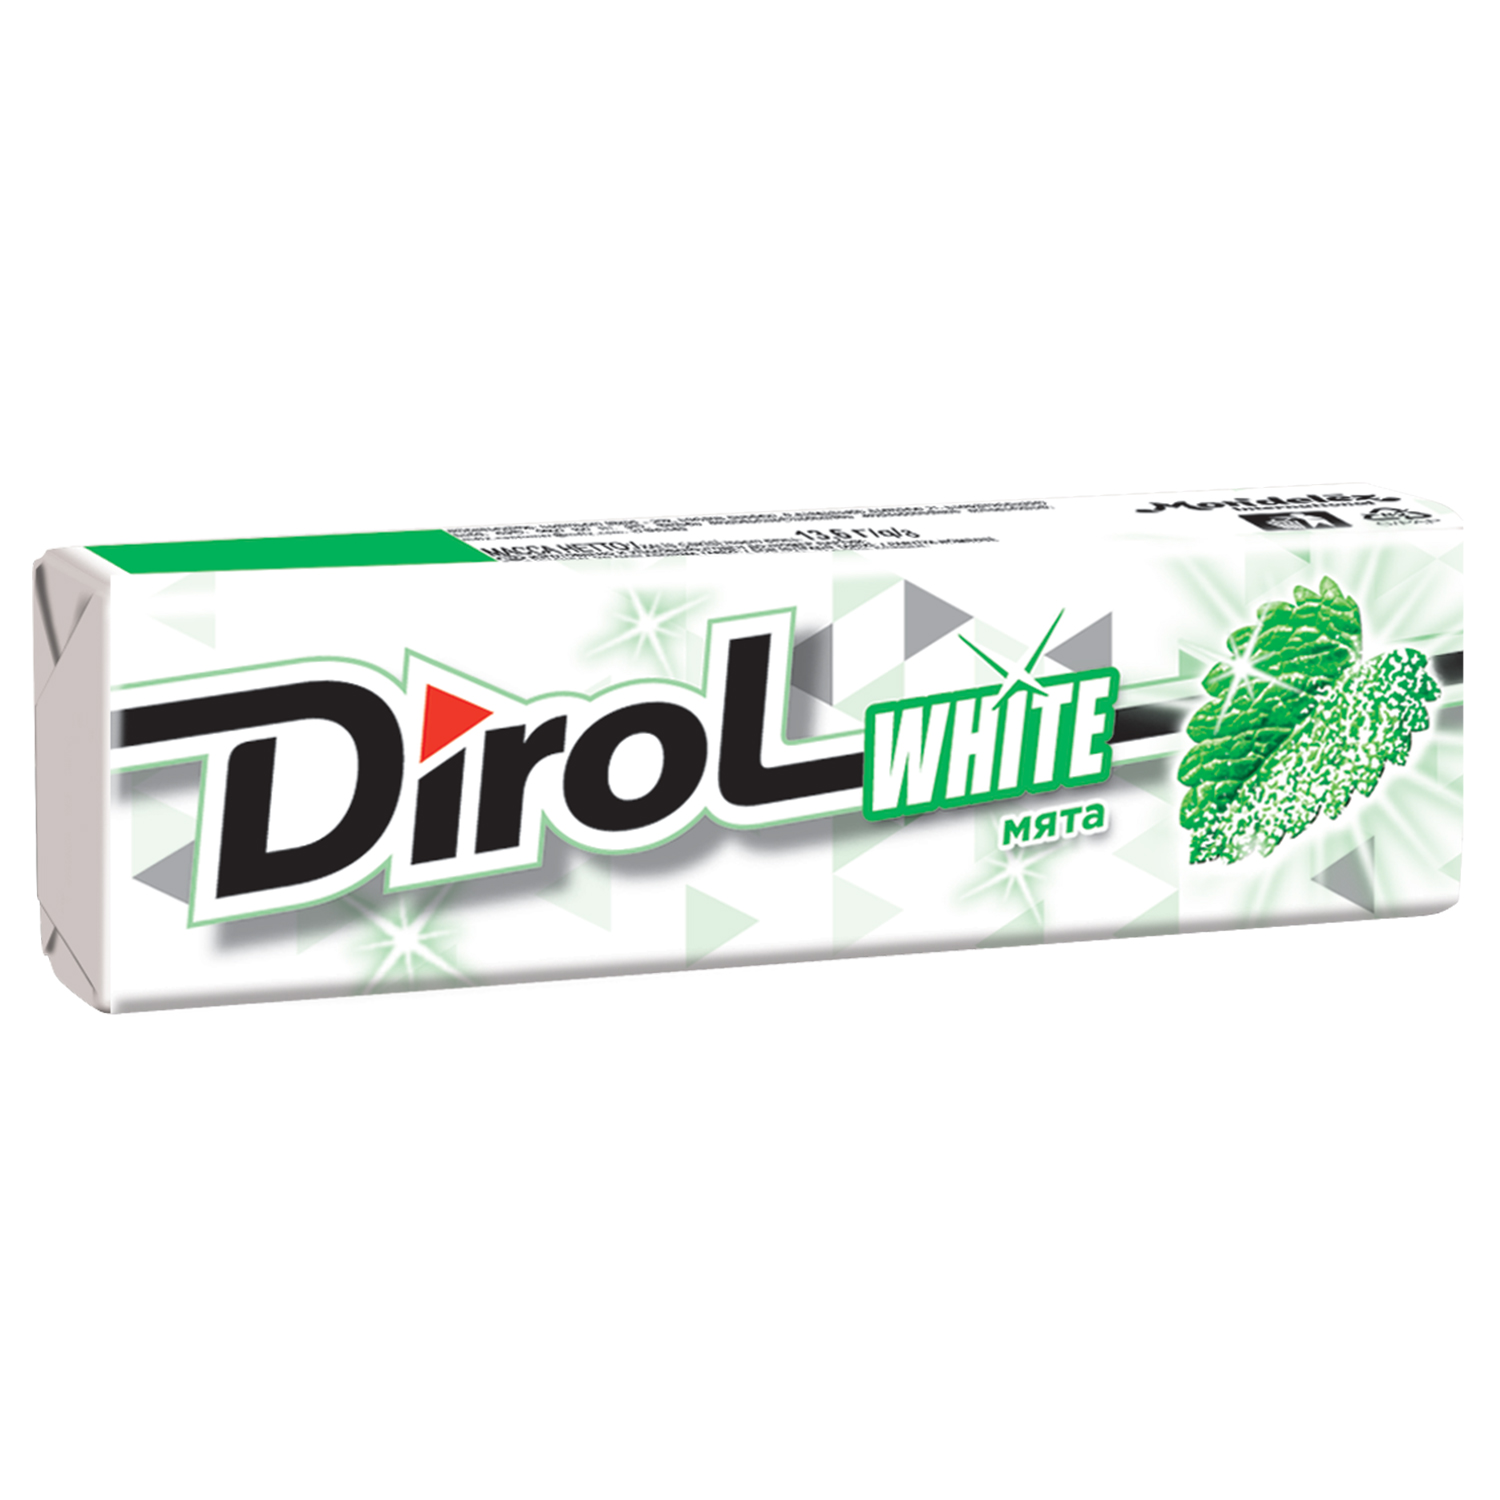    Dirol WHITE    